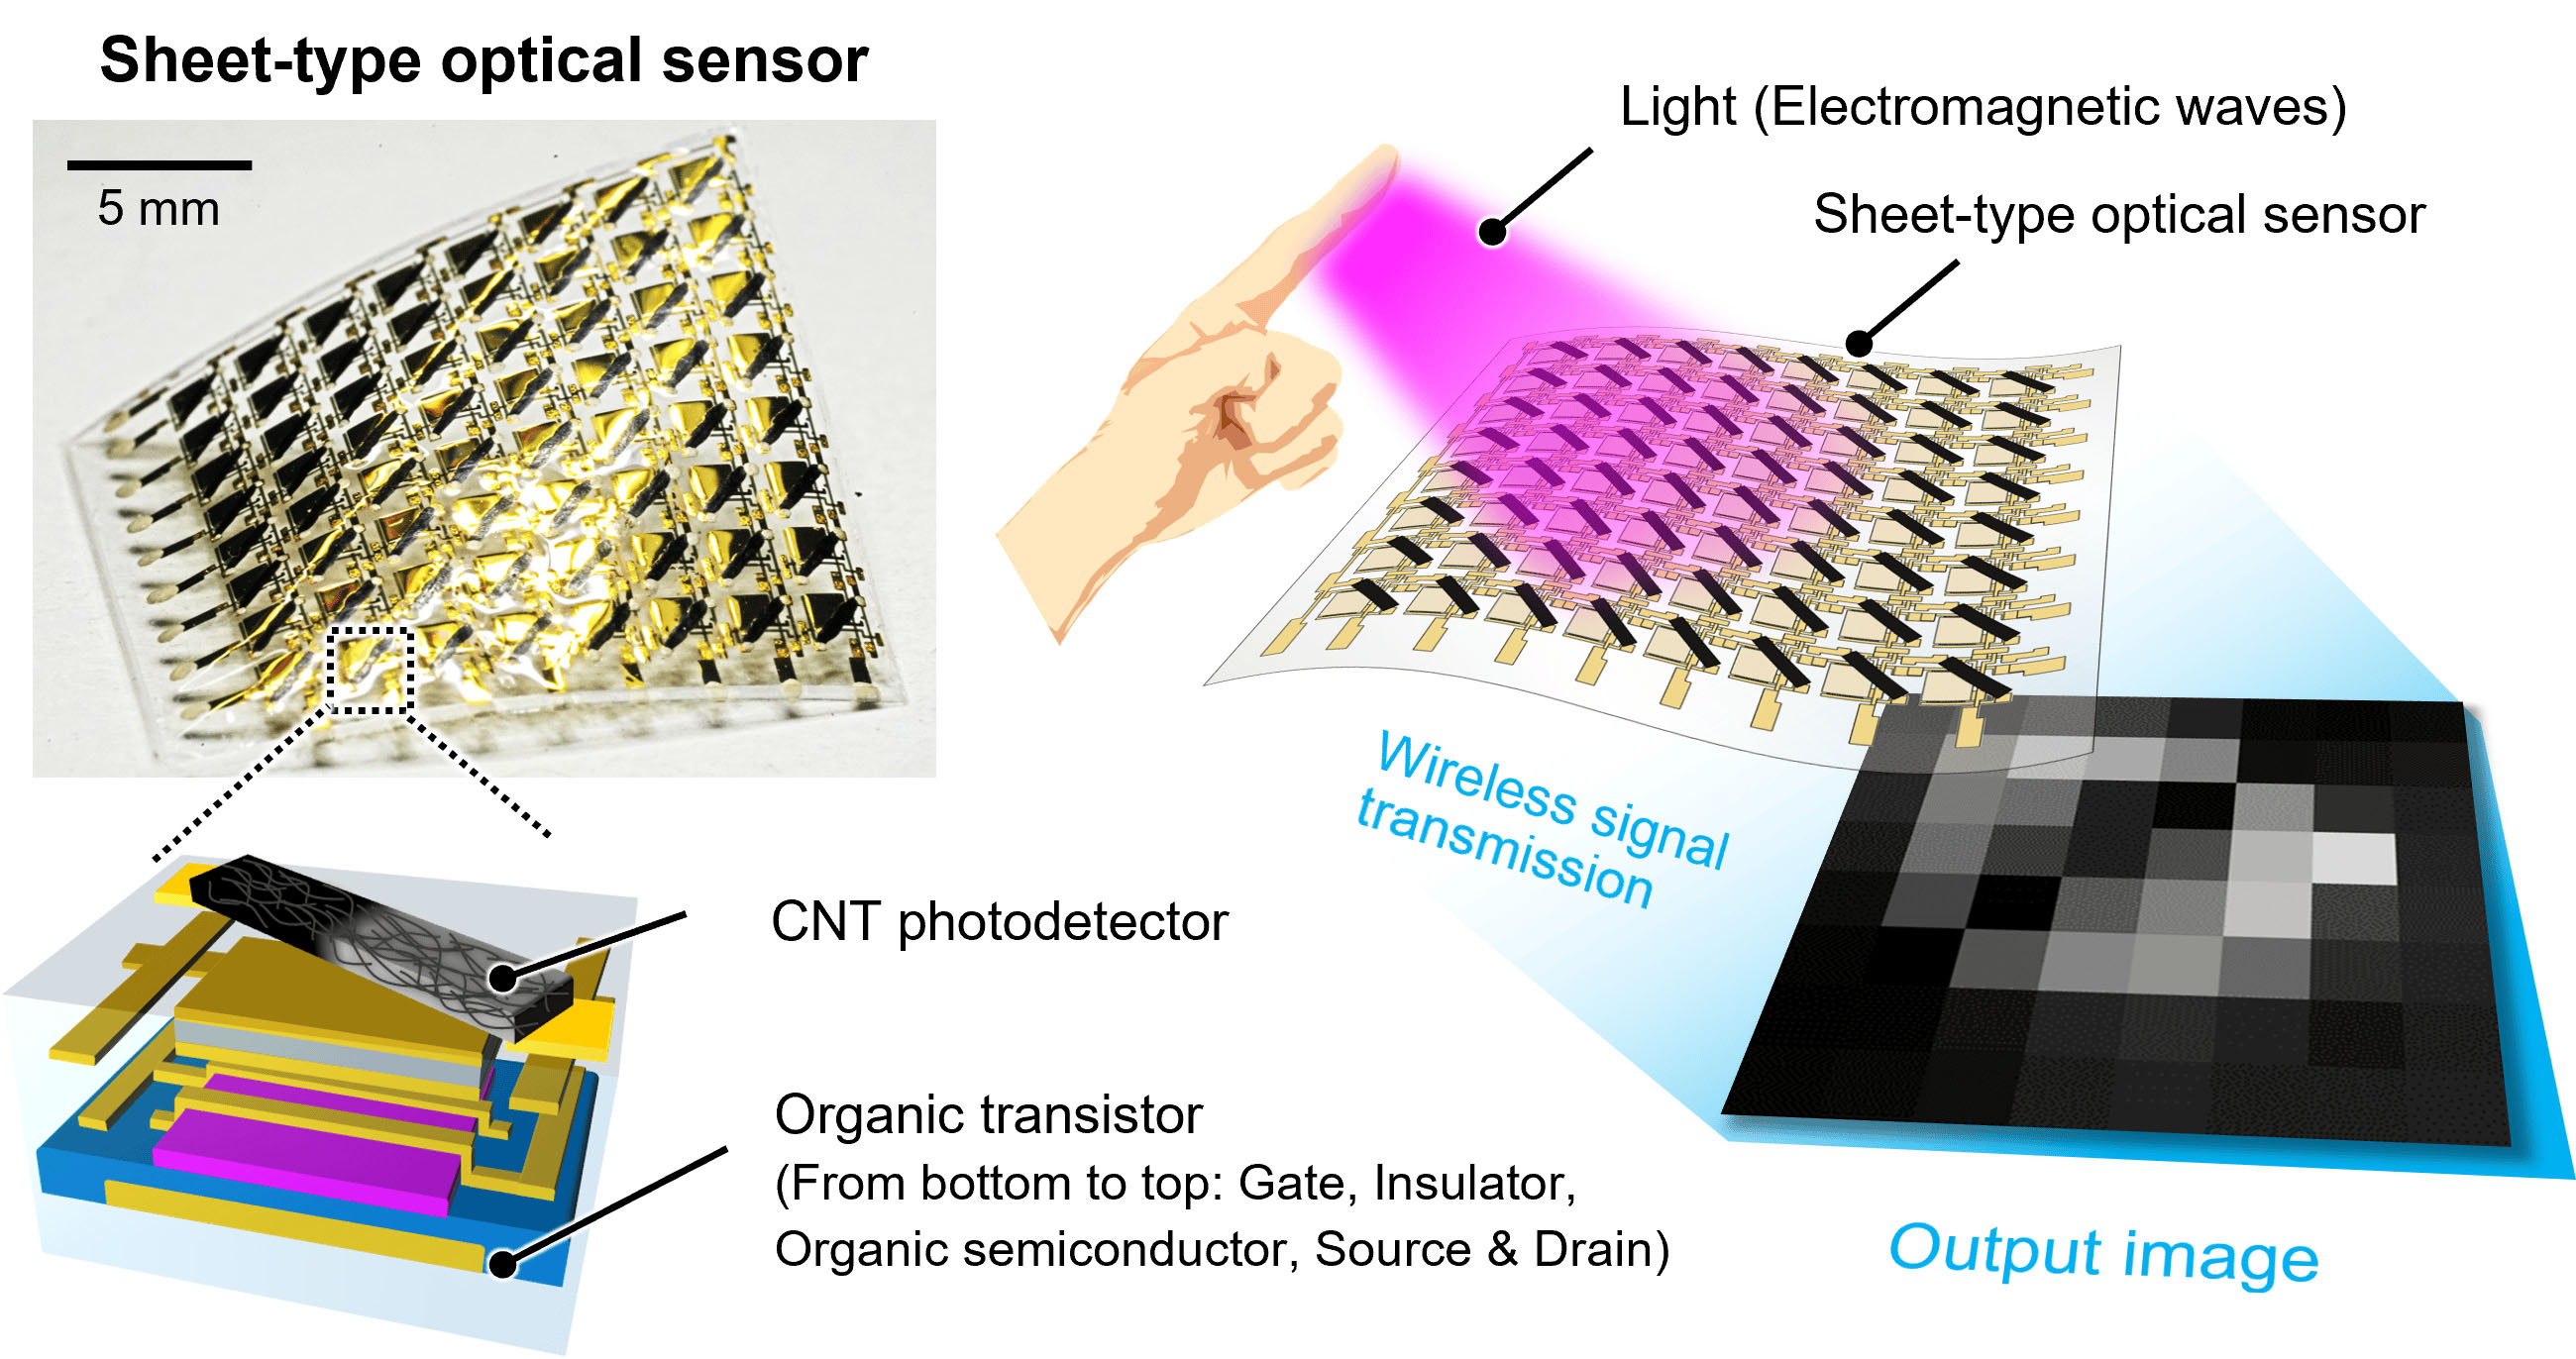 Sheet-type optical sensor integrated with a carbon nanotube photodetector and an organic transistor